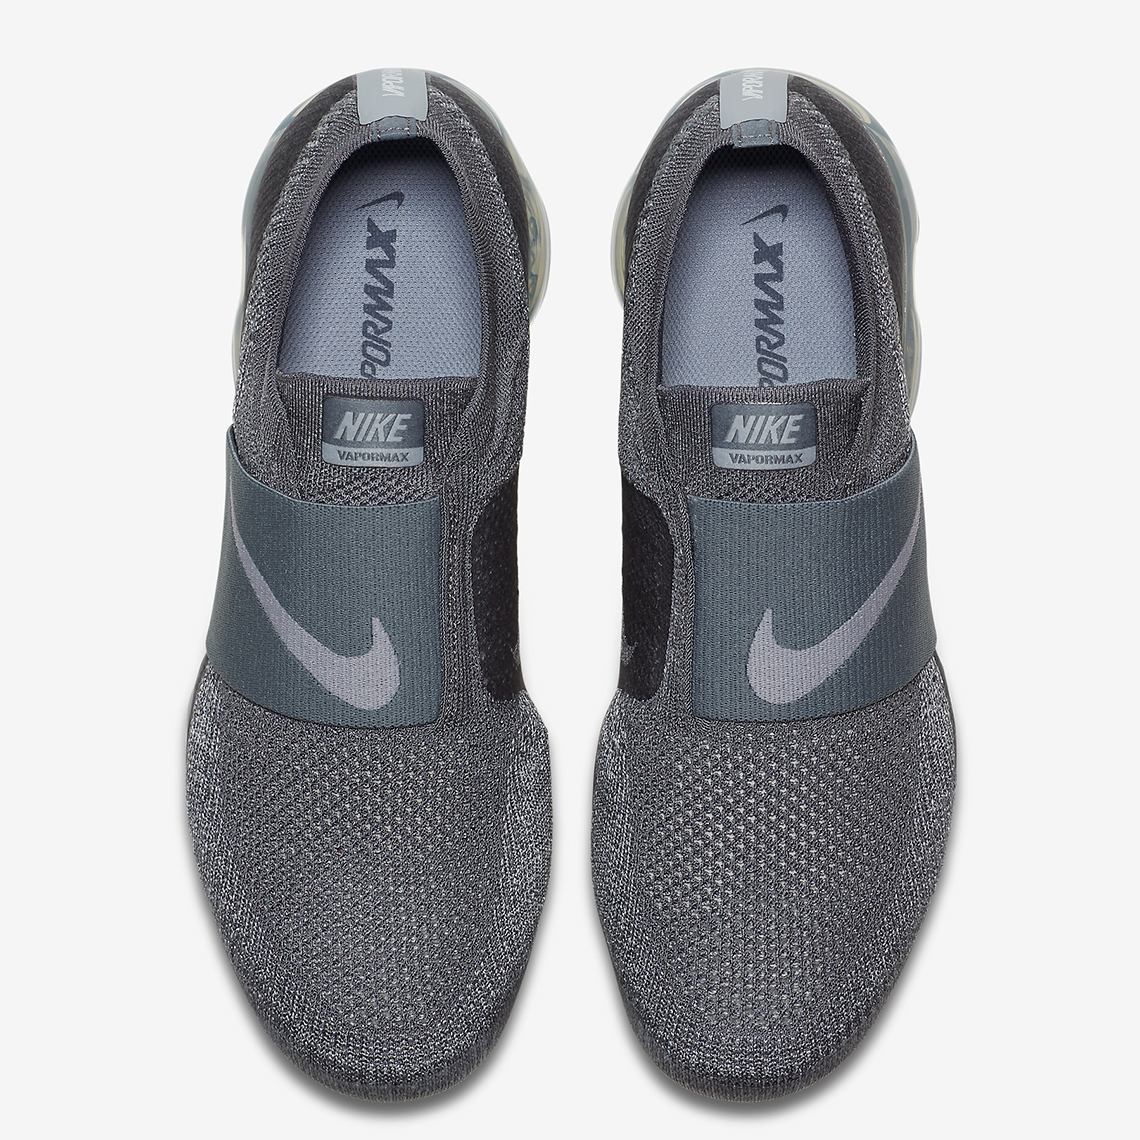 Nike Vapormax Moc "Cool Grey" Release Info SneakerNews.com